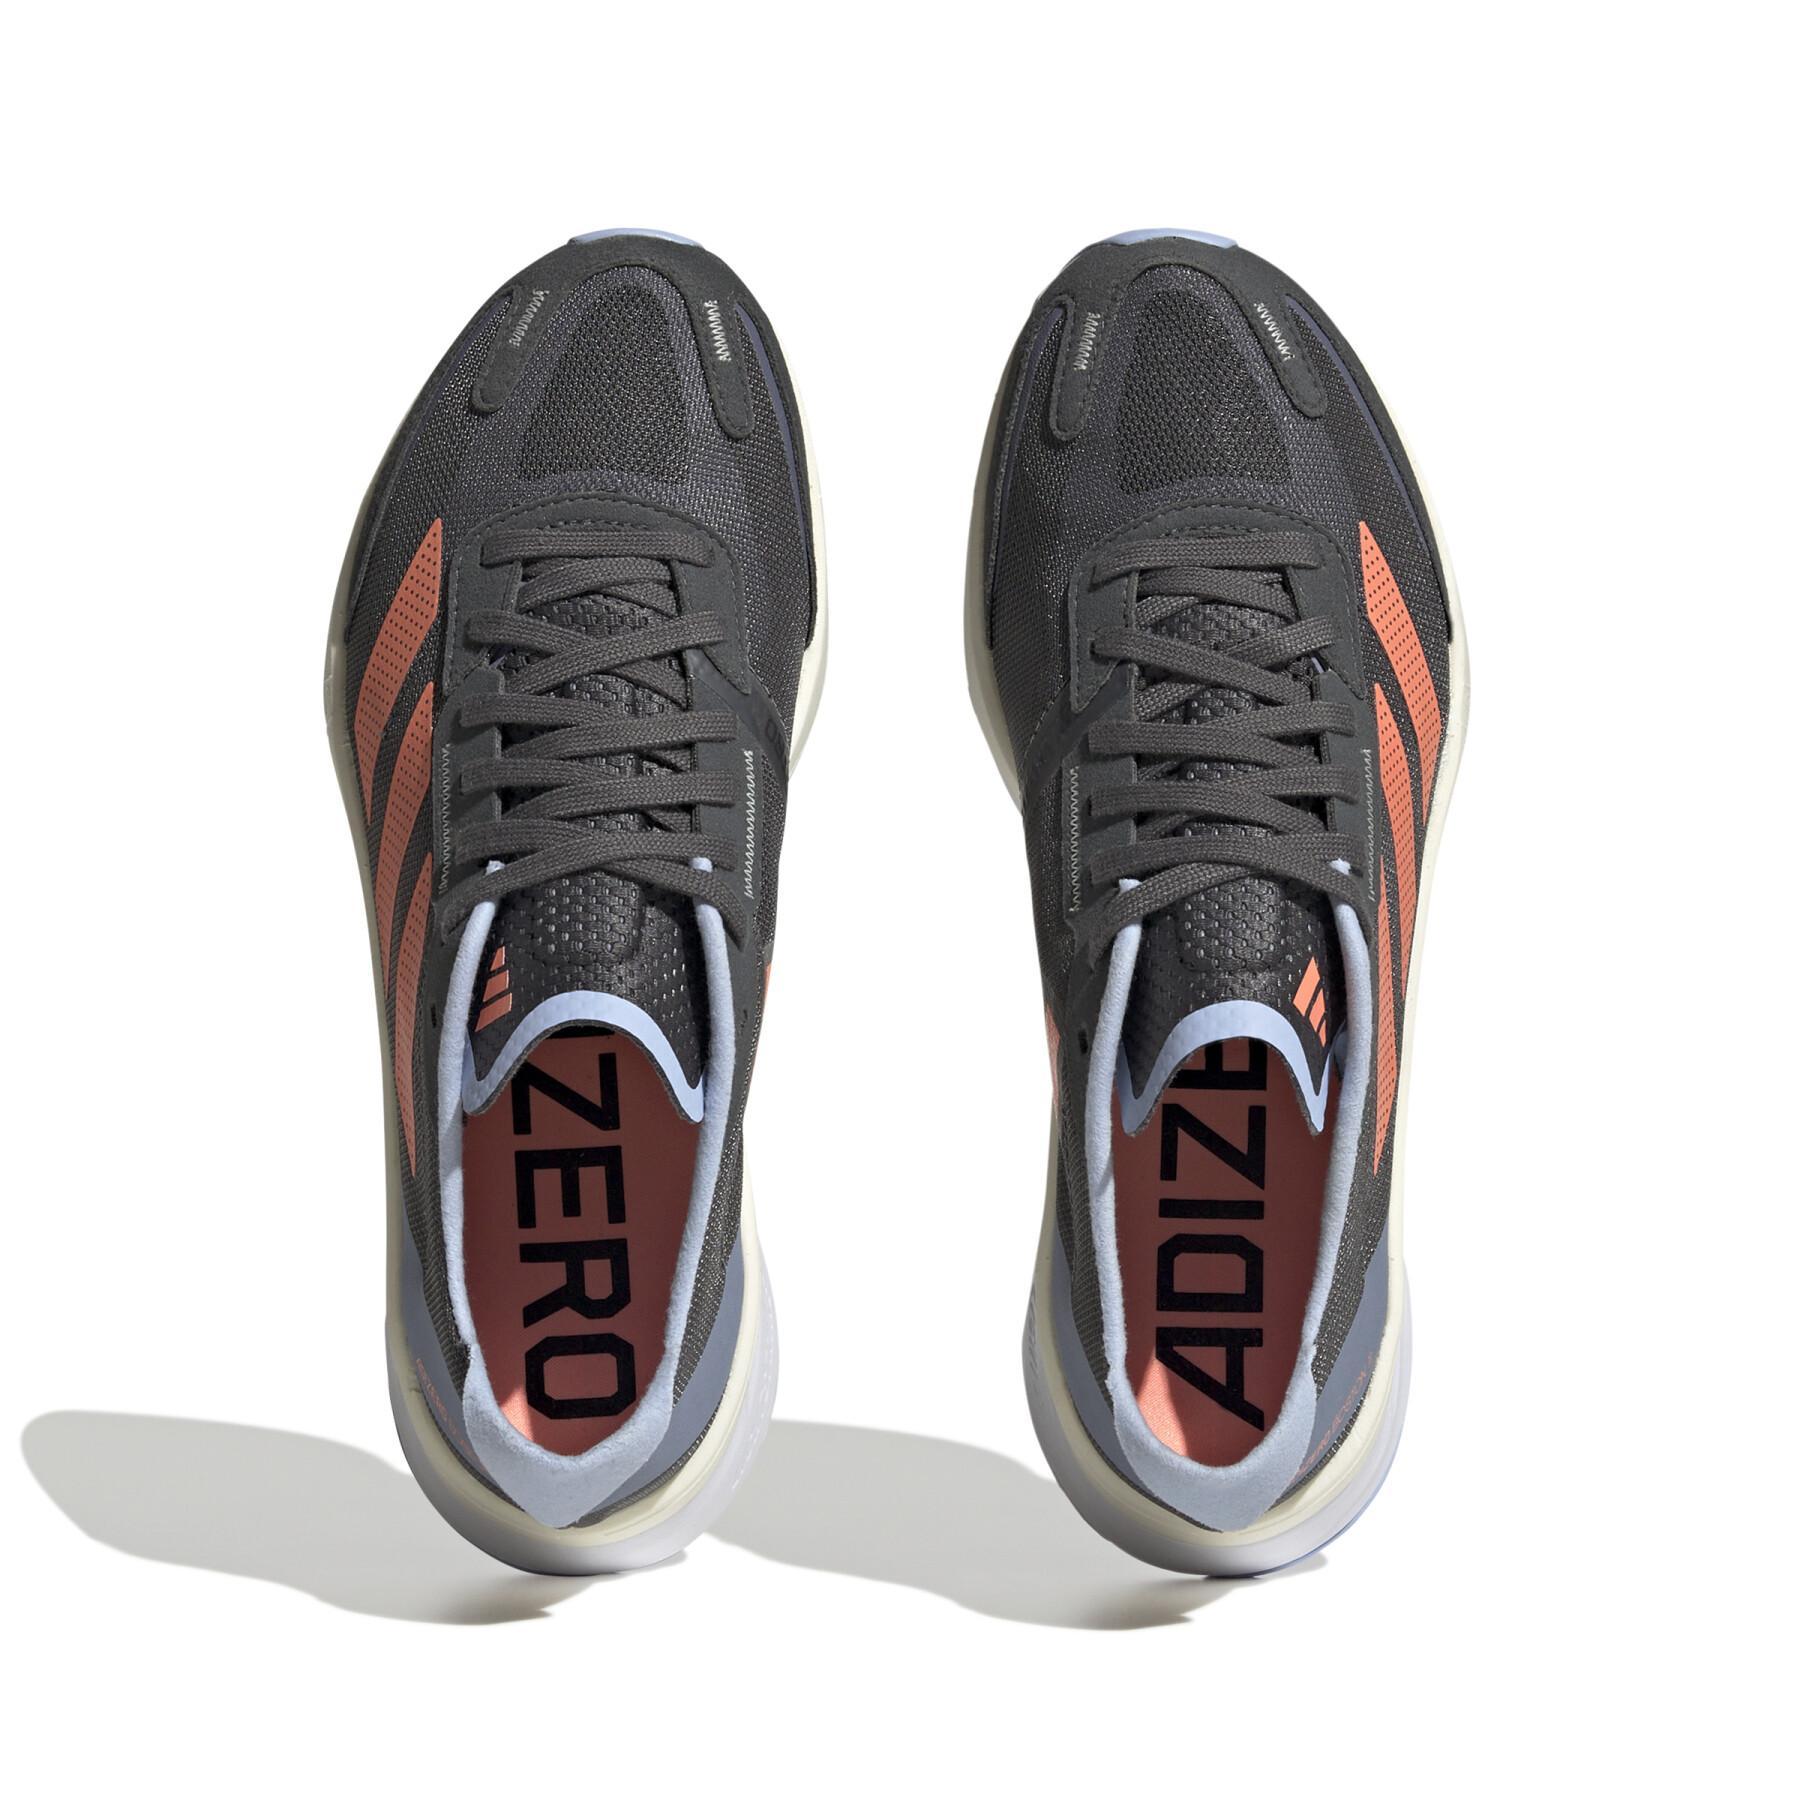 Shoes from running femme adidas Adizero Boston 11